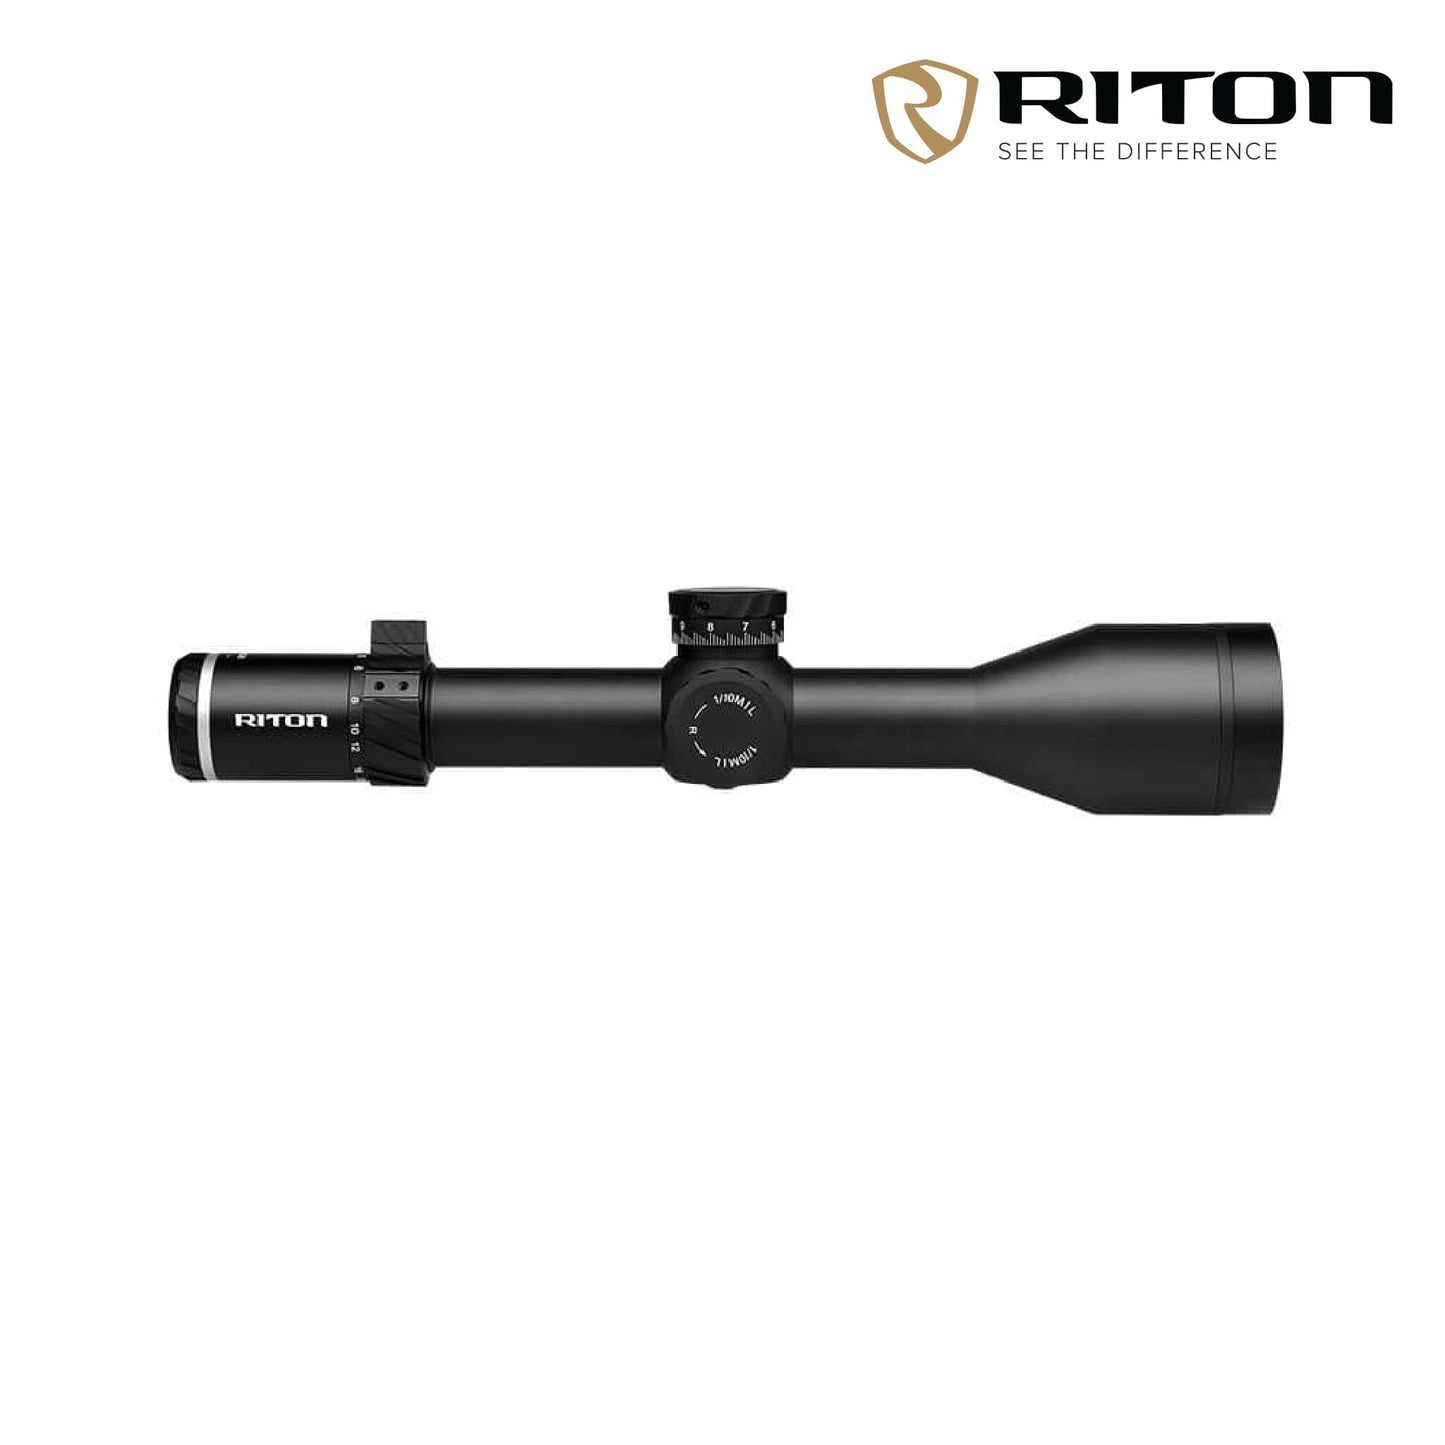 Riton Optics 7 Conquer 3-24x56 Rifle Scope Illuminated ODEN Reticle - 7C324LFI23 Rifle Scope Riton Optics 